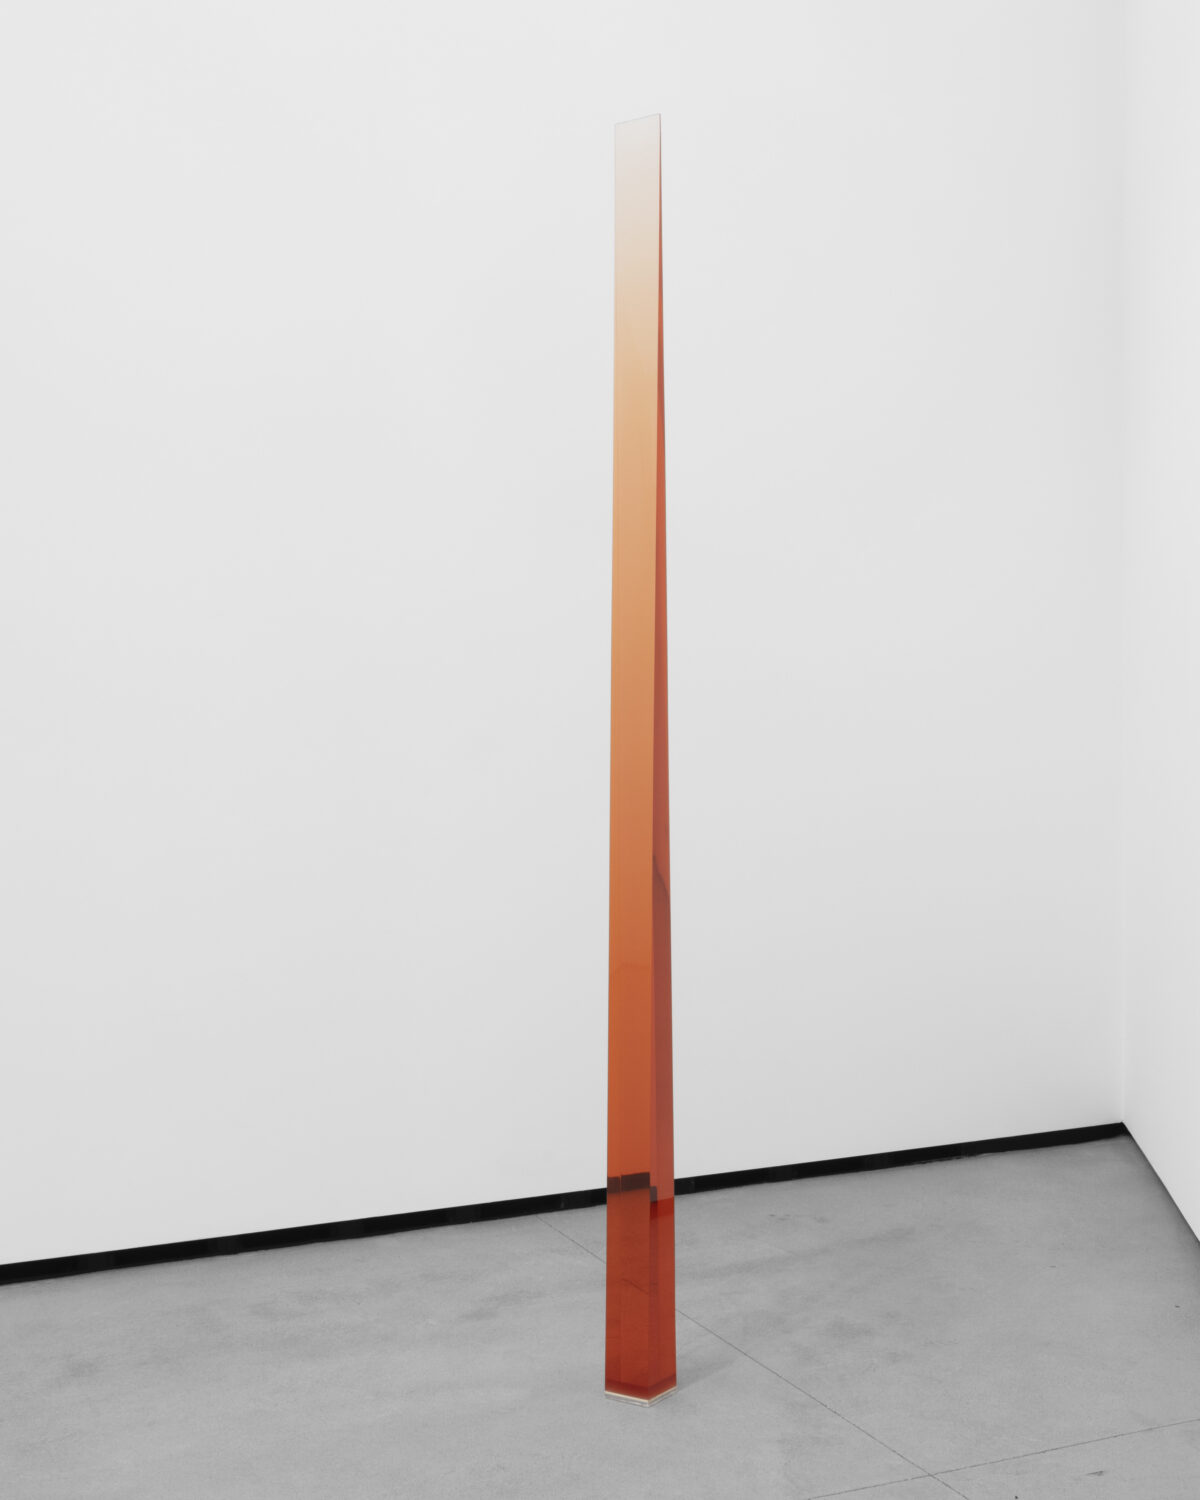 An upright, orange column.